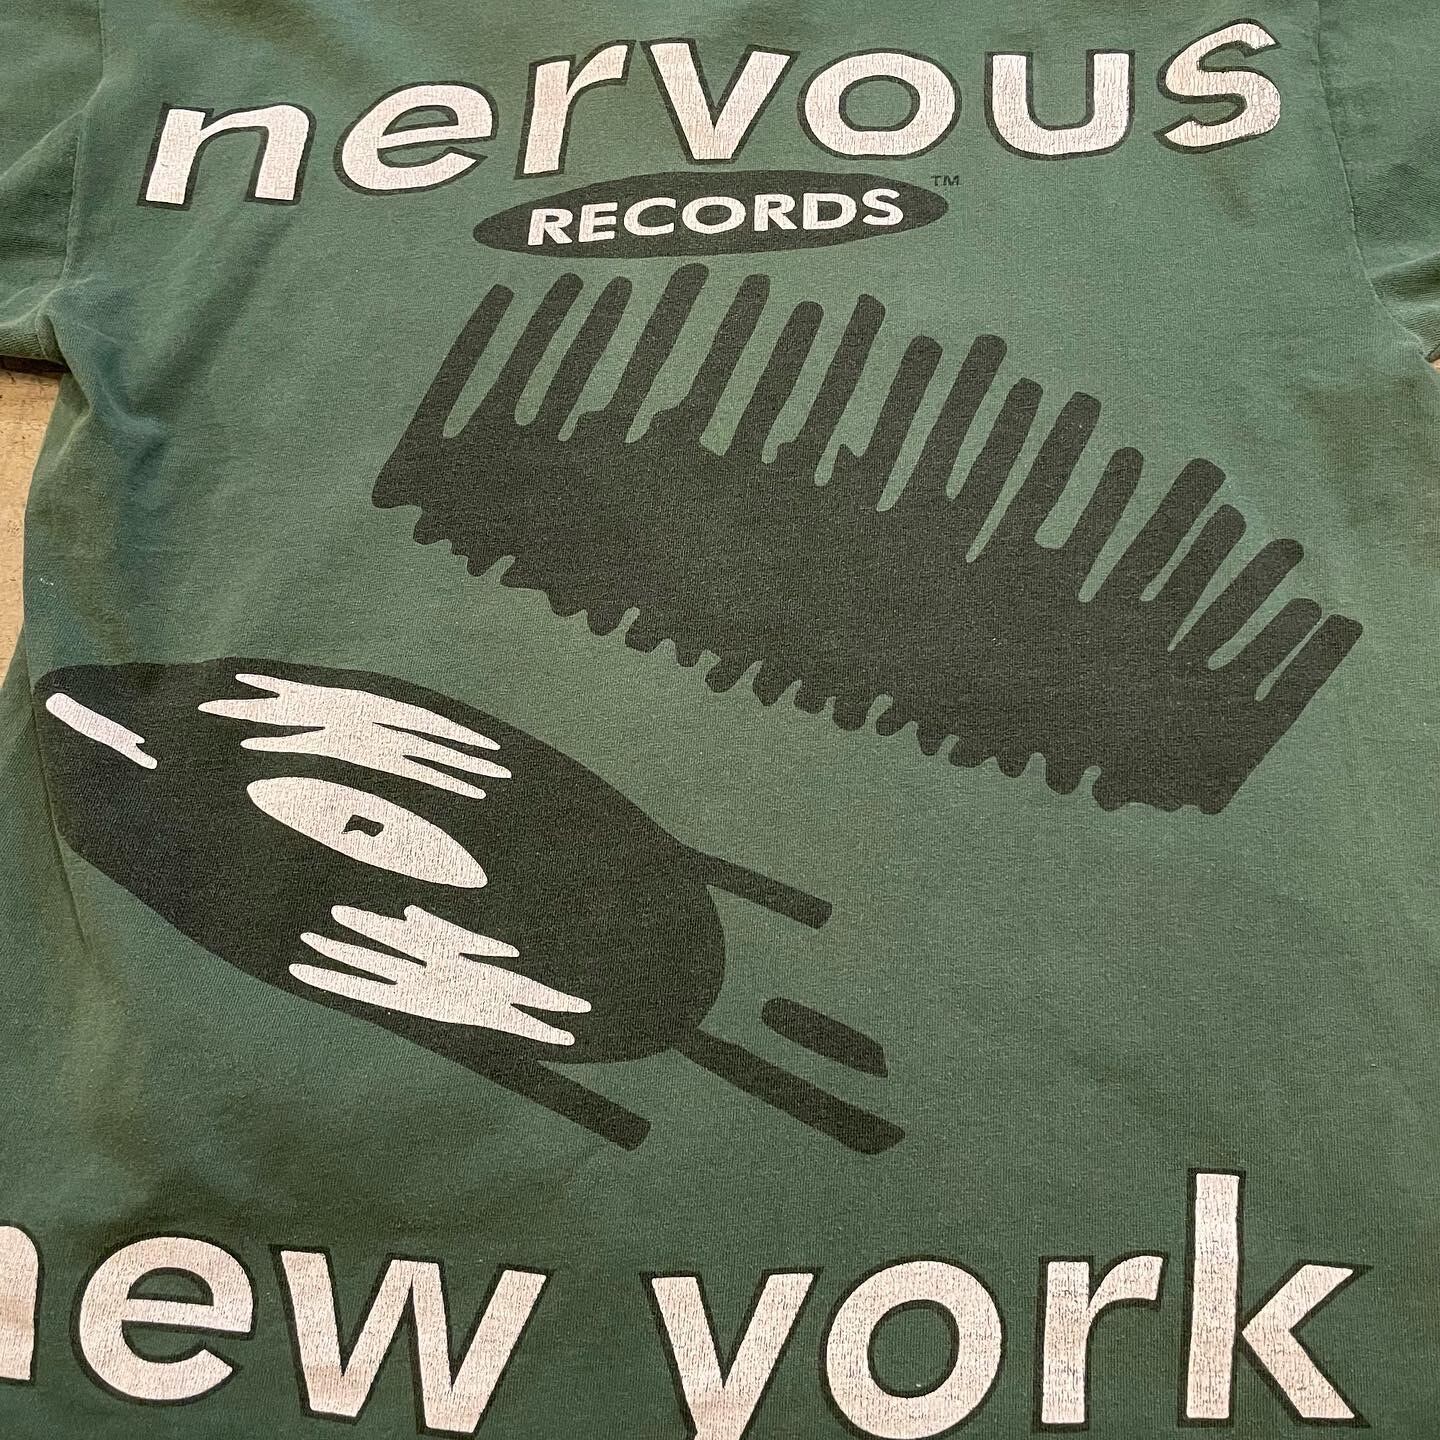 90s Vintage Nervous Records New York Tee